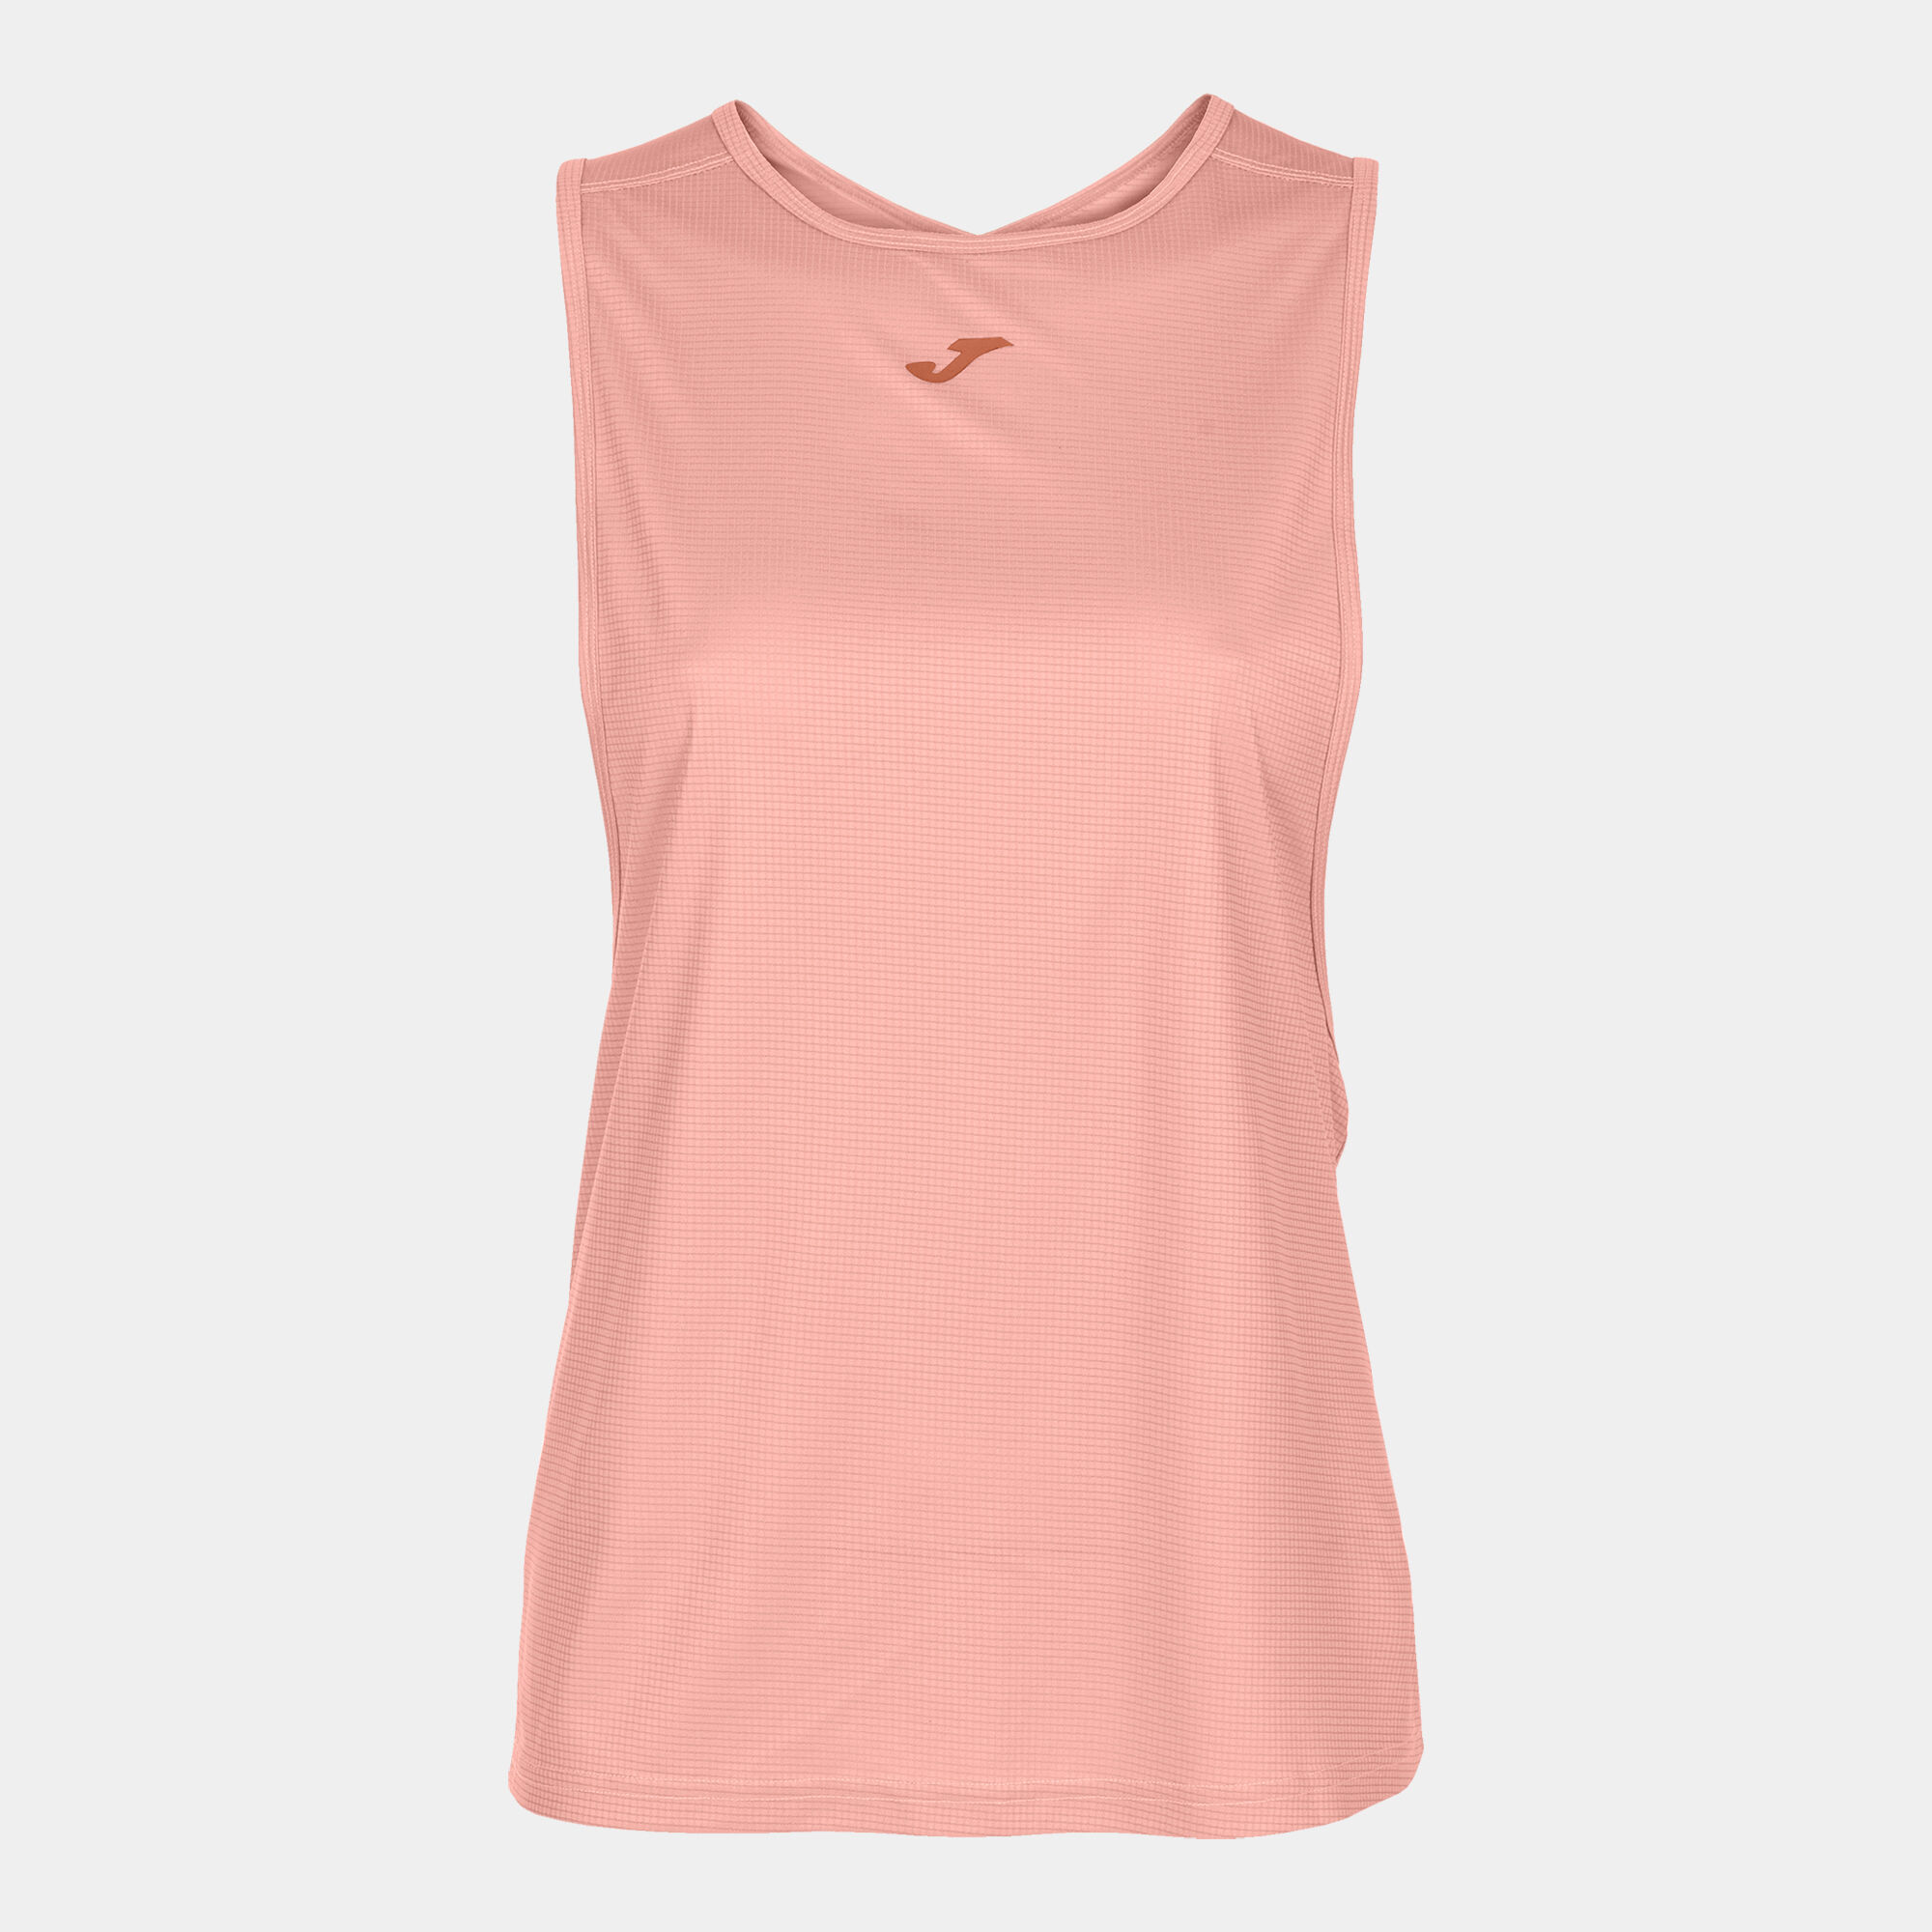 Camiseta tirantes mujer Core rosa